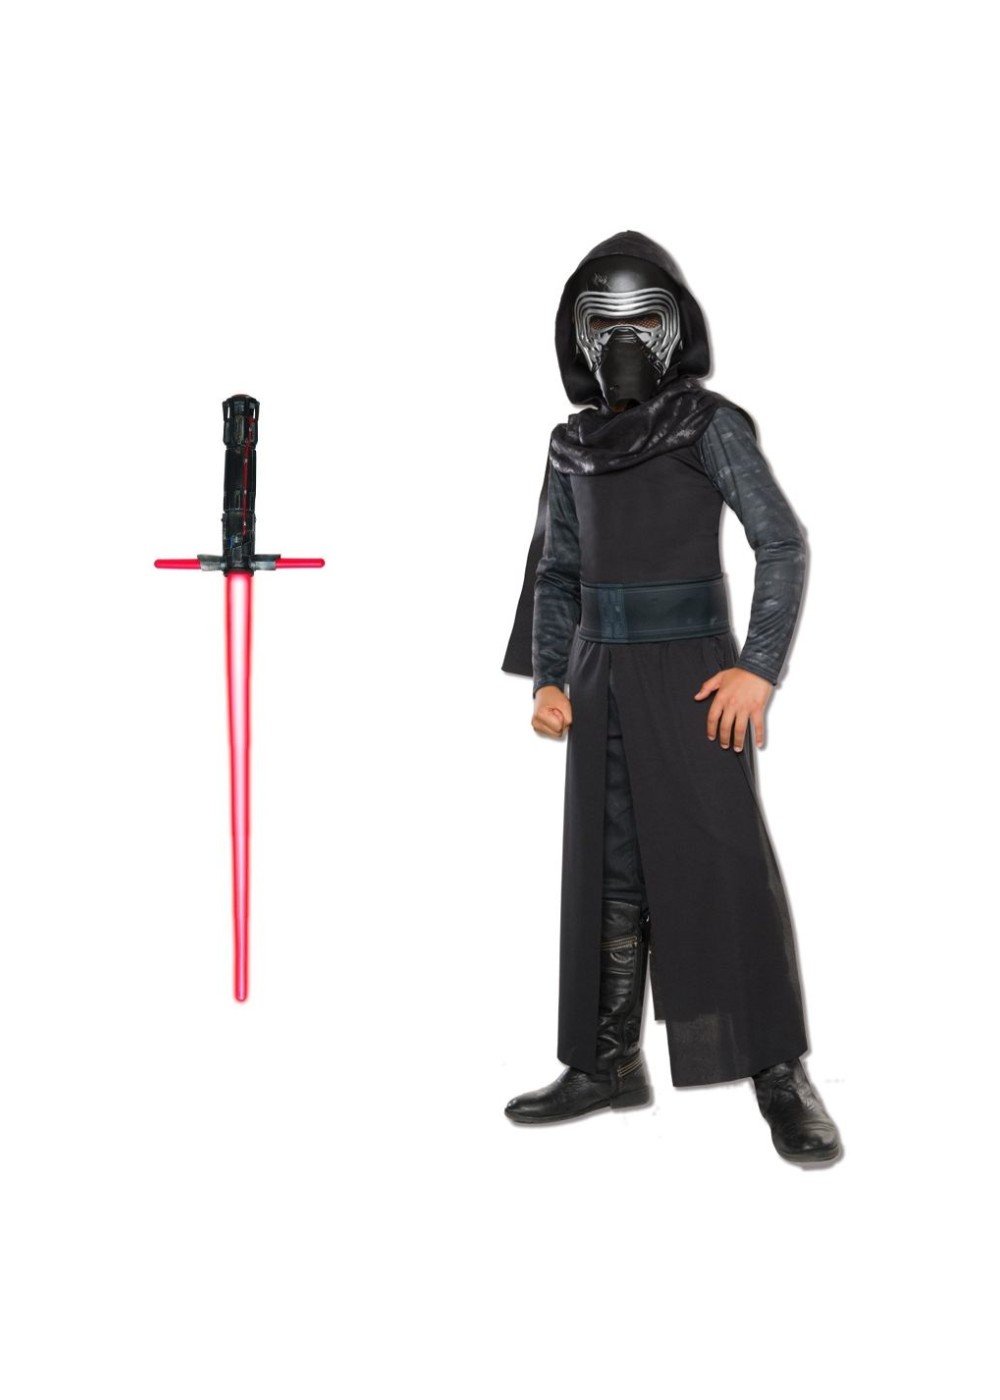 Star Wars Kylo Ren The Force Awakens Costume Kit